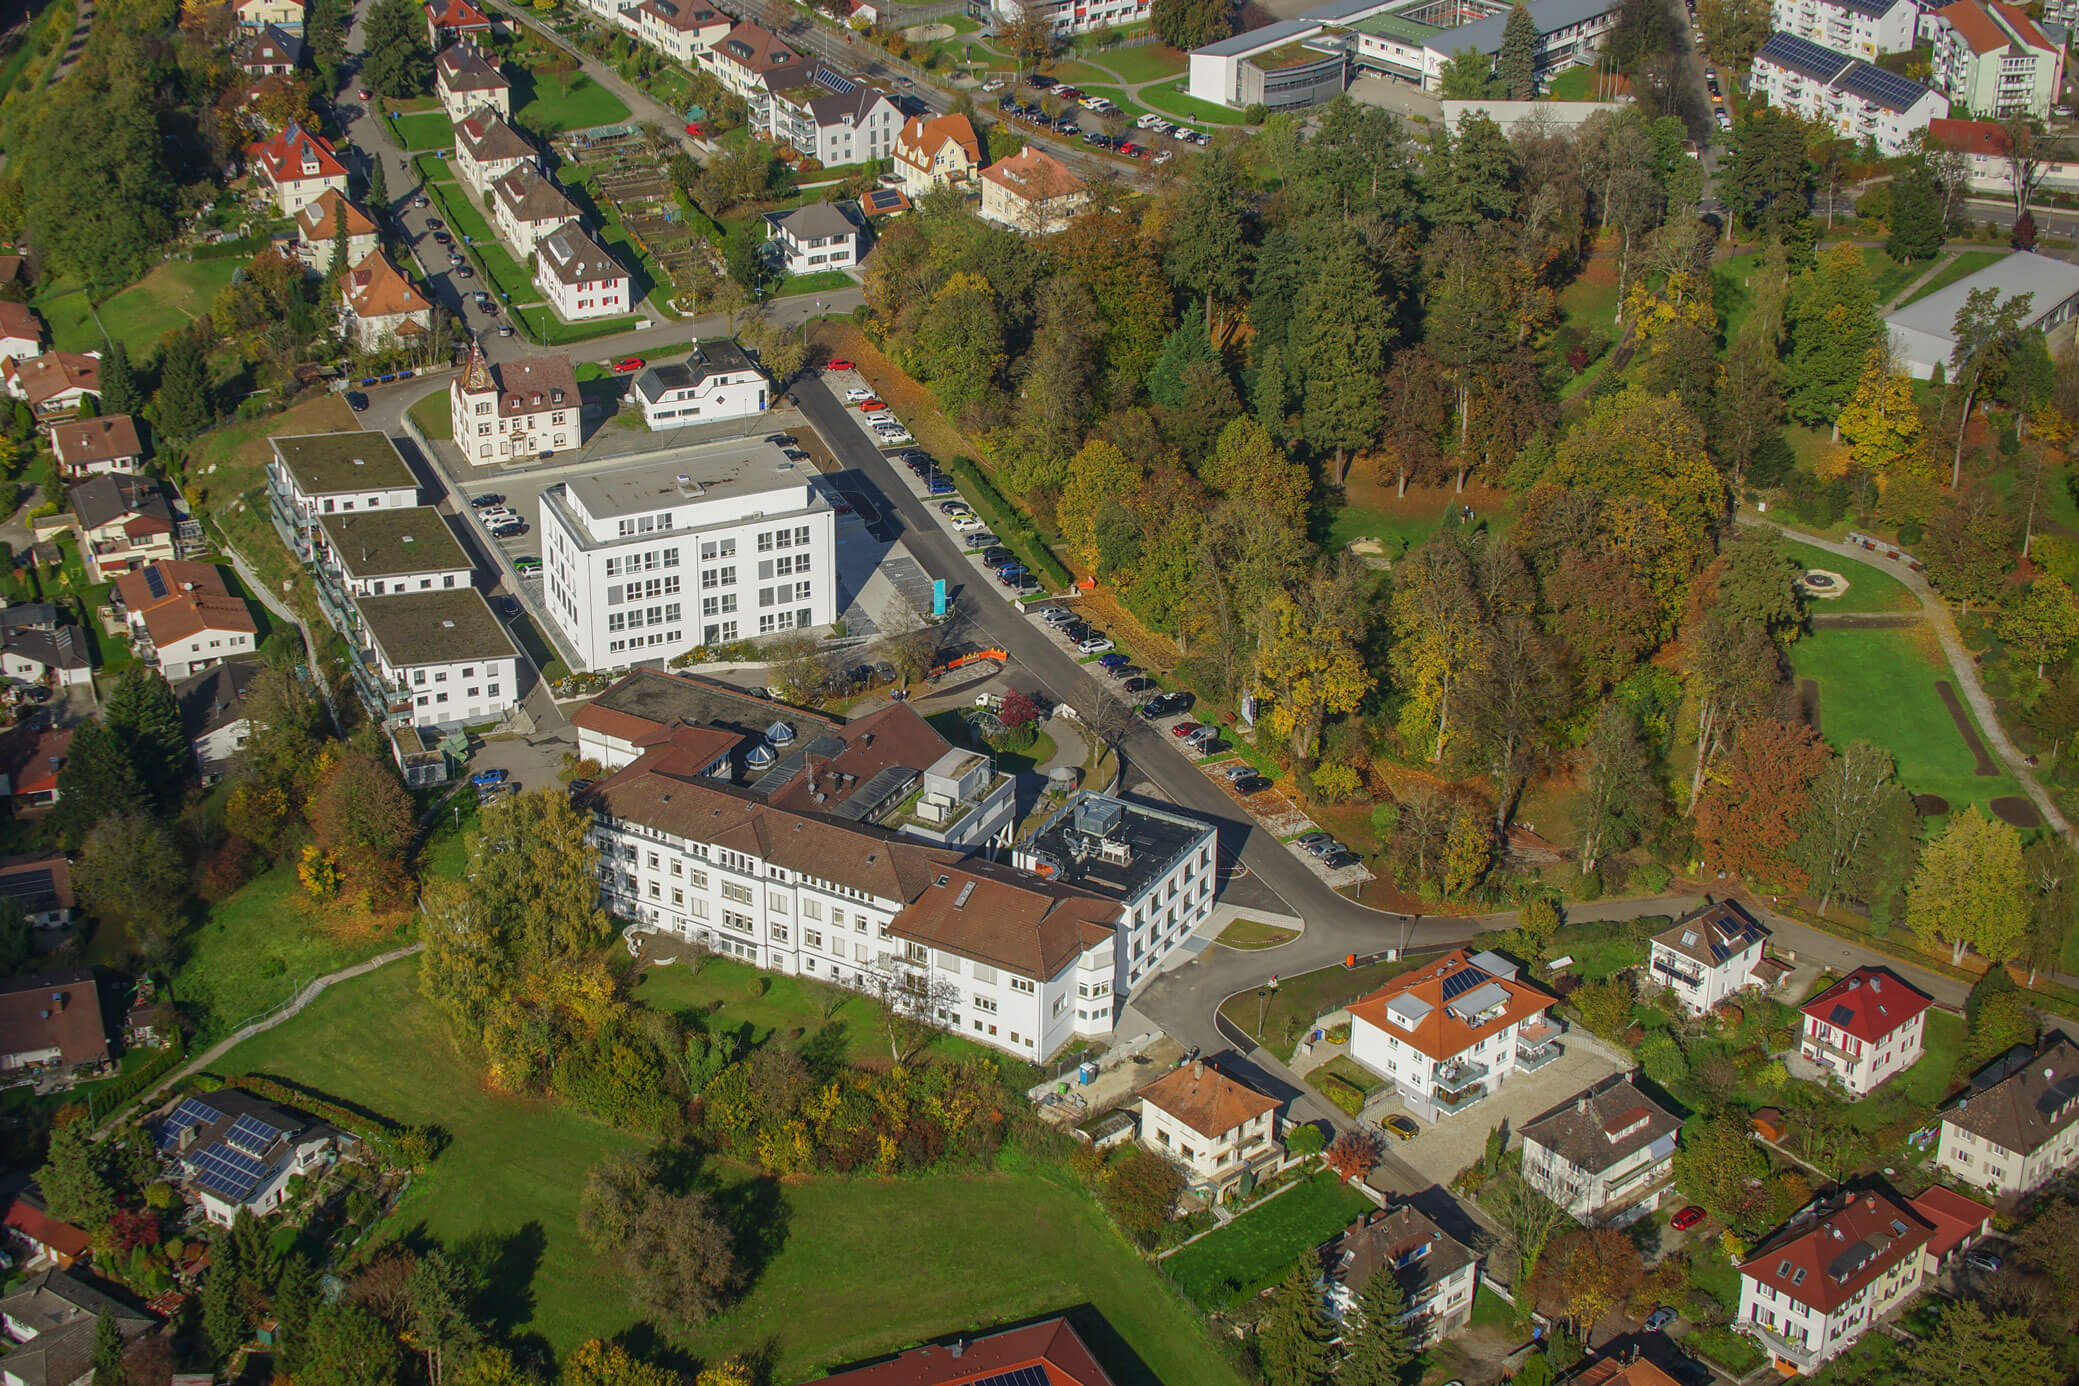 (c) Krankenhaus-stockach.de